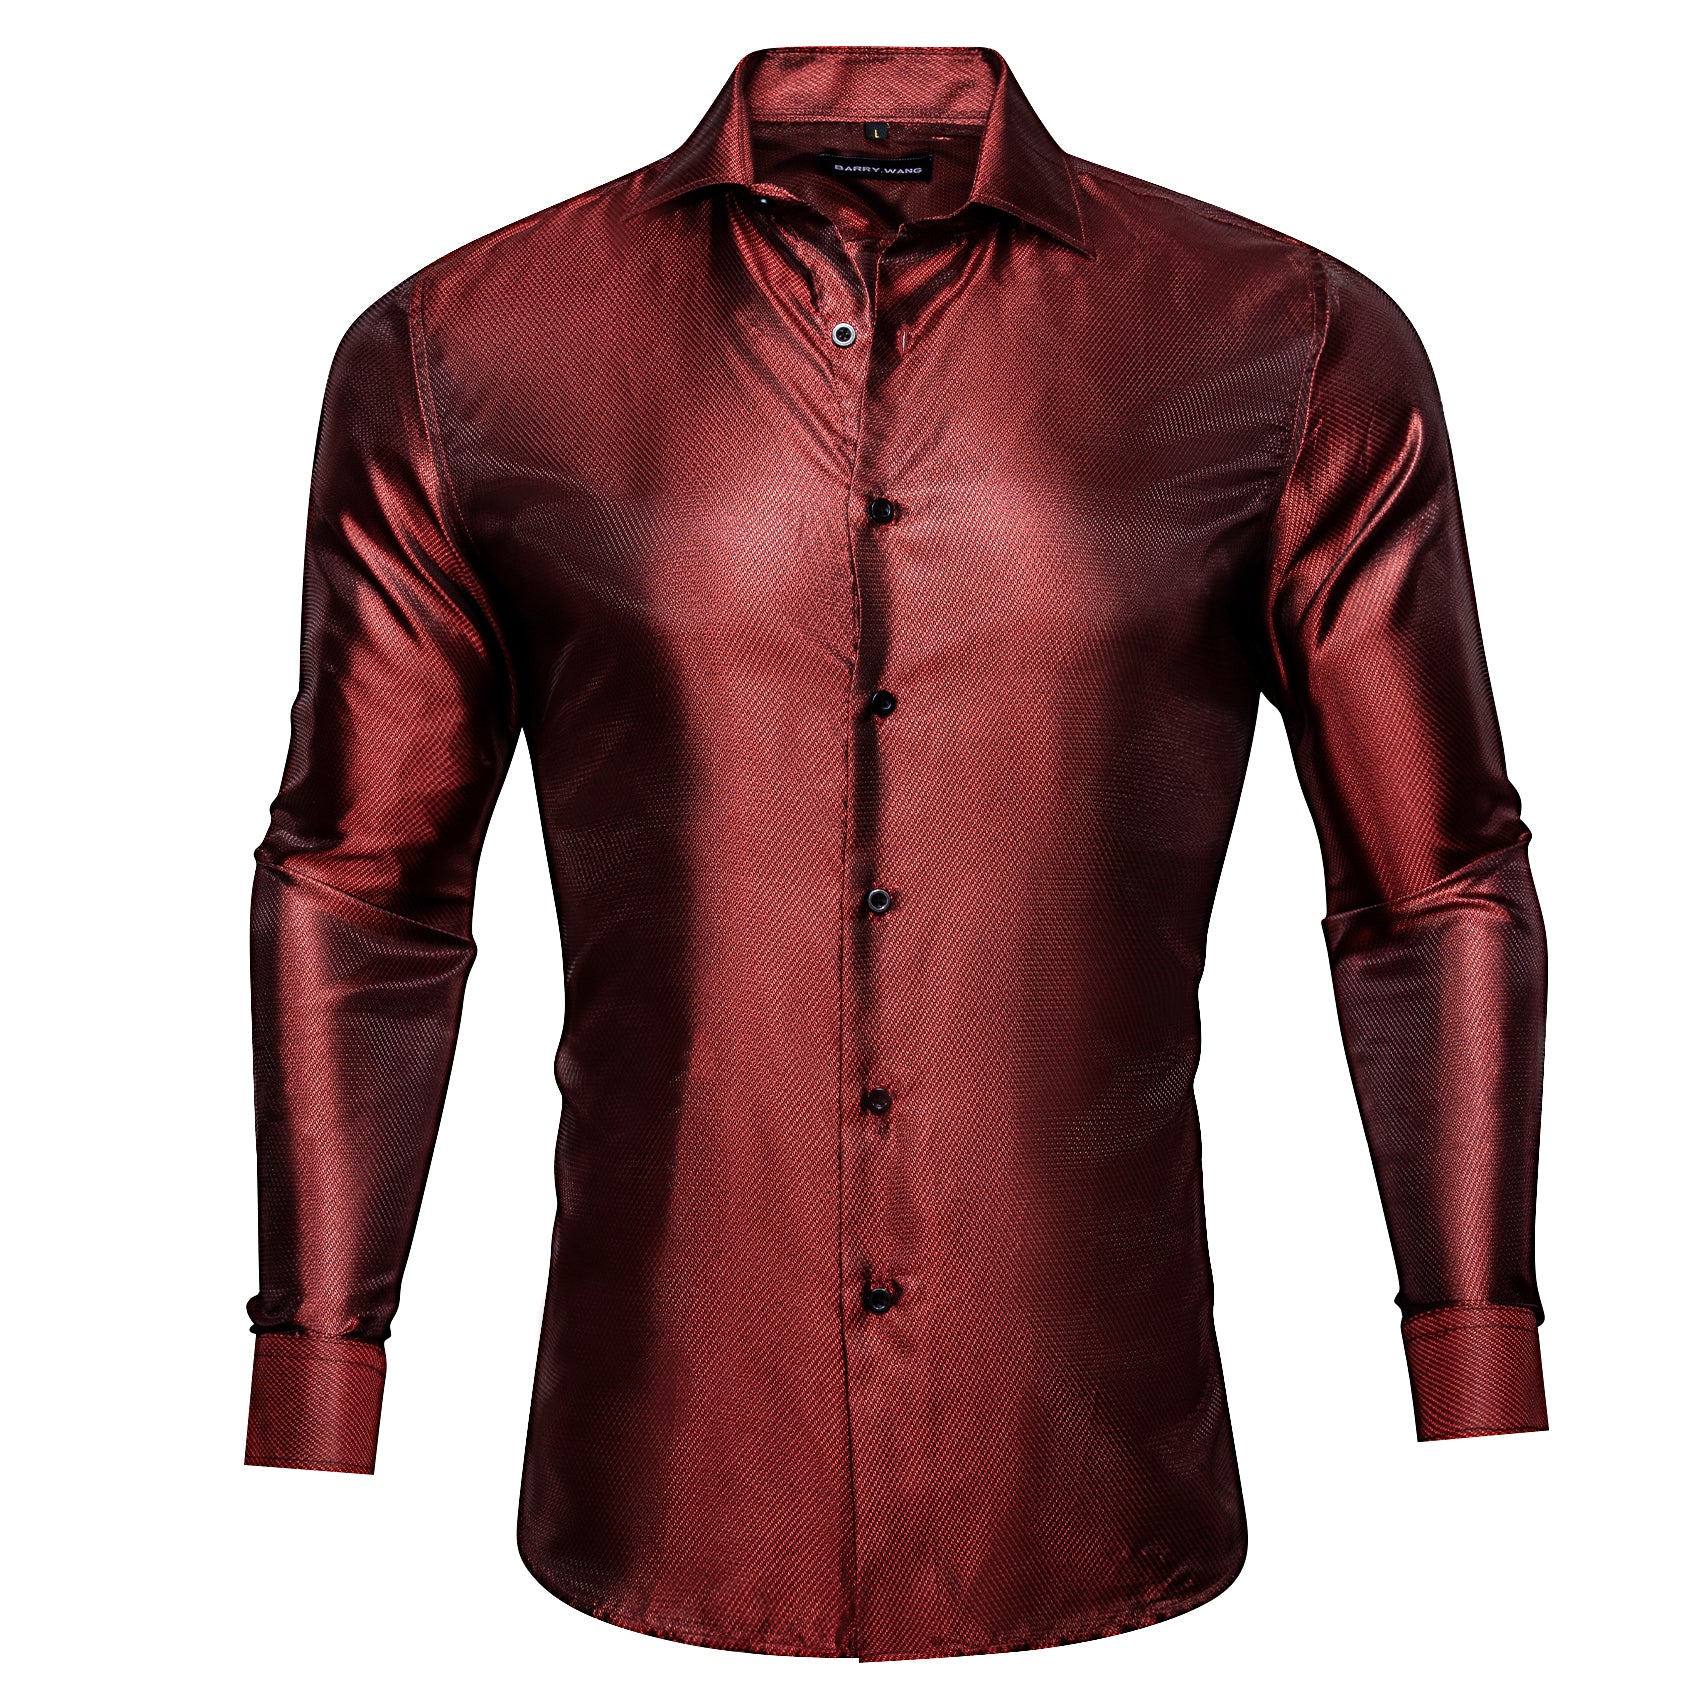 Barry.wang New Rust Red Solid Silk Shirt